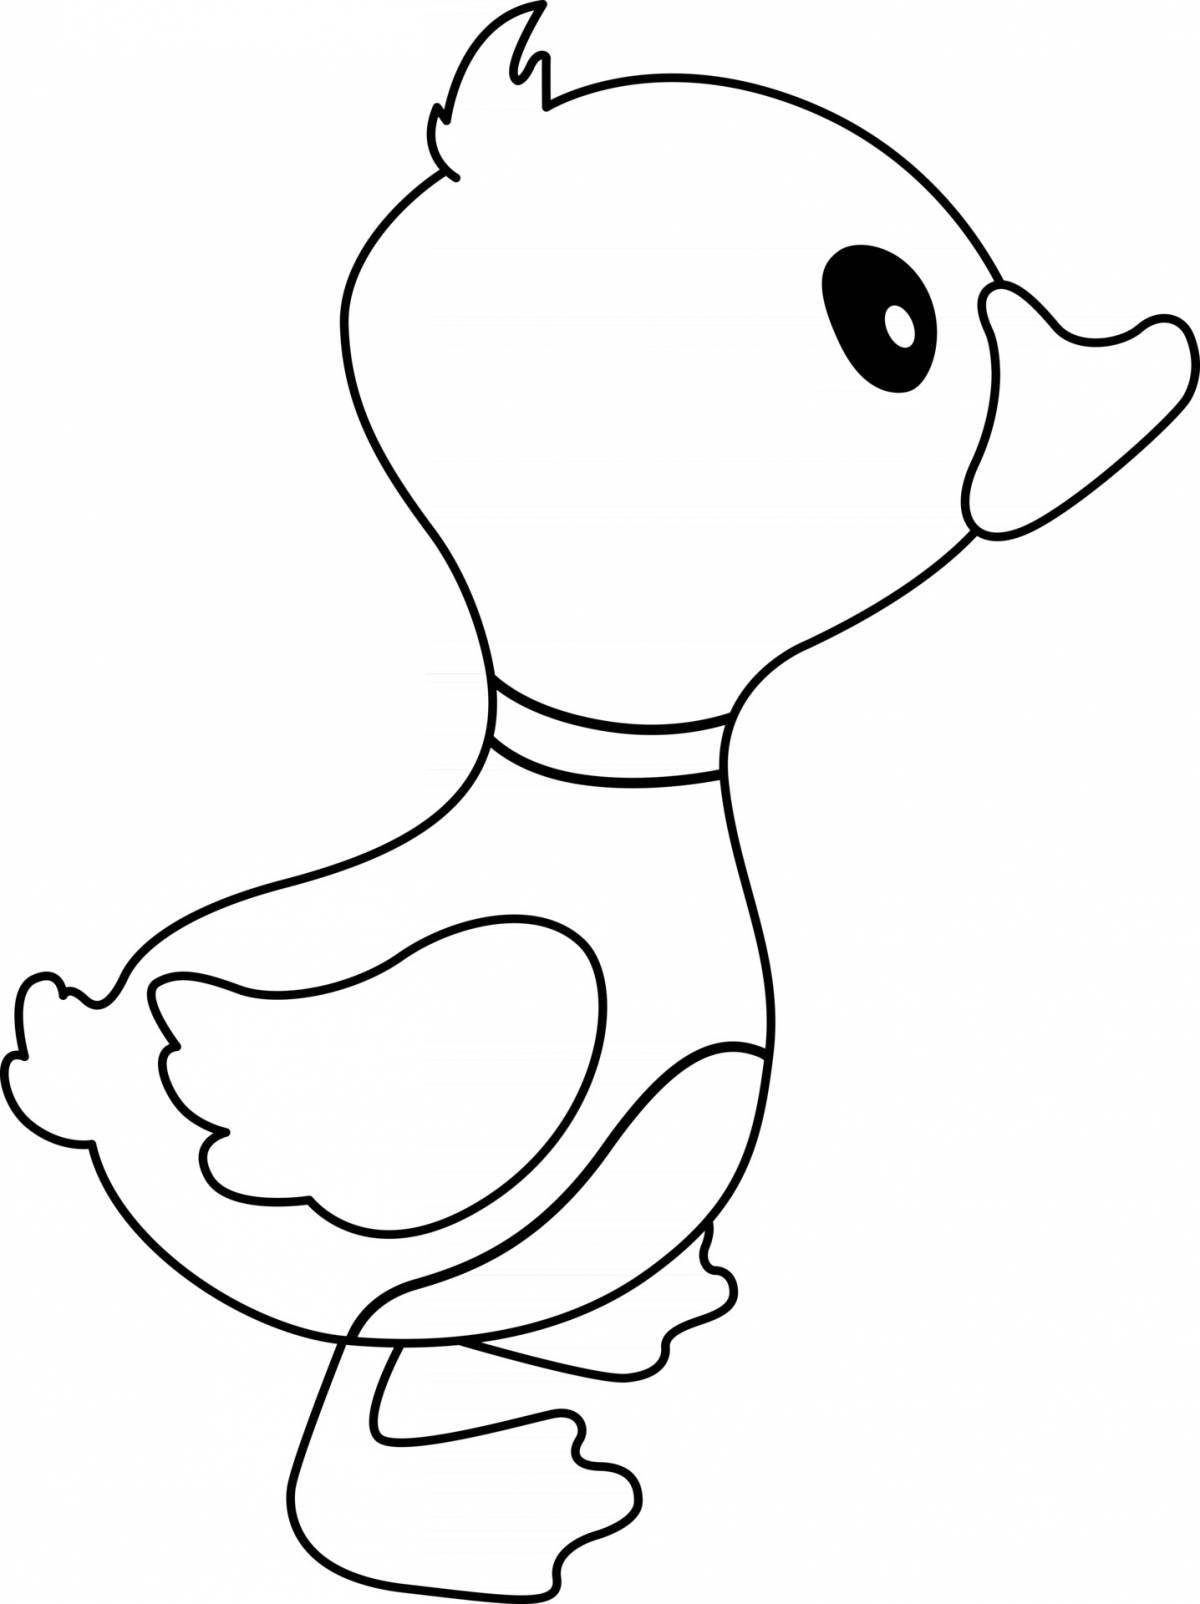 Adorable lalanfant duck coloring page